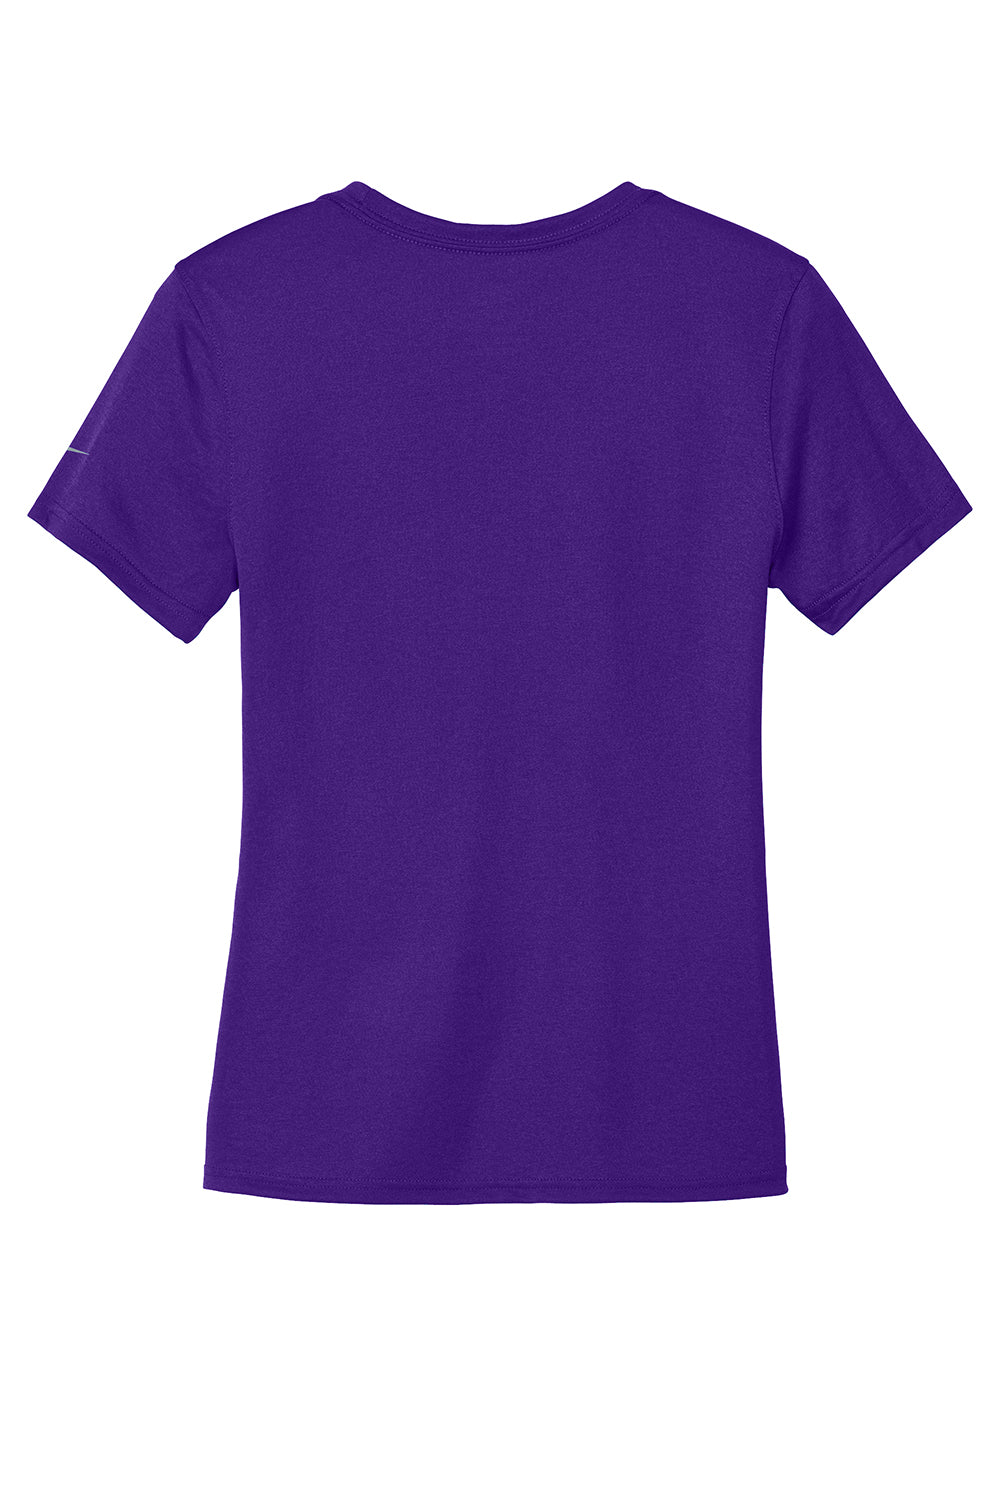 Nike NKDX8734 Womens rLegend Dri-Fit Moisture Wicking Short Sleeve Crewneck T-Shirt Court Purple Flat Back